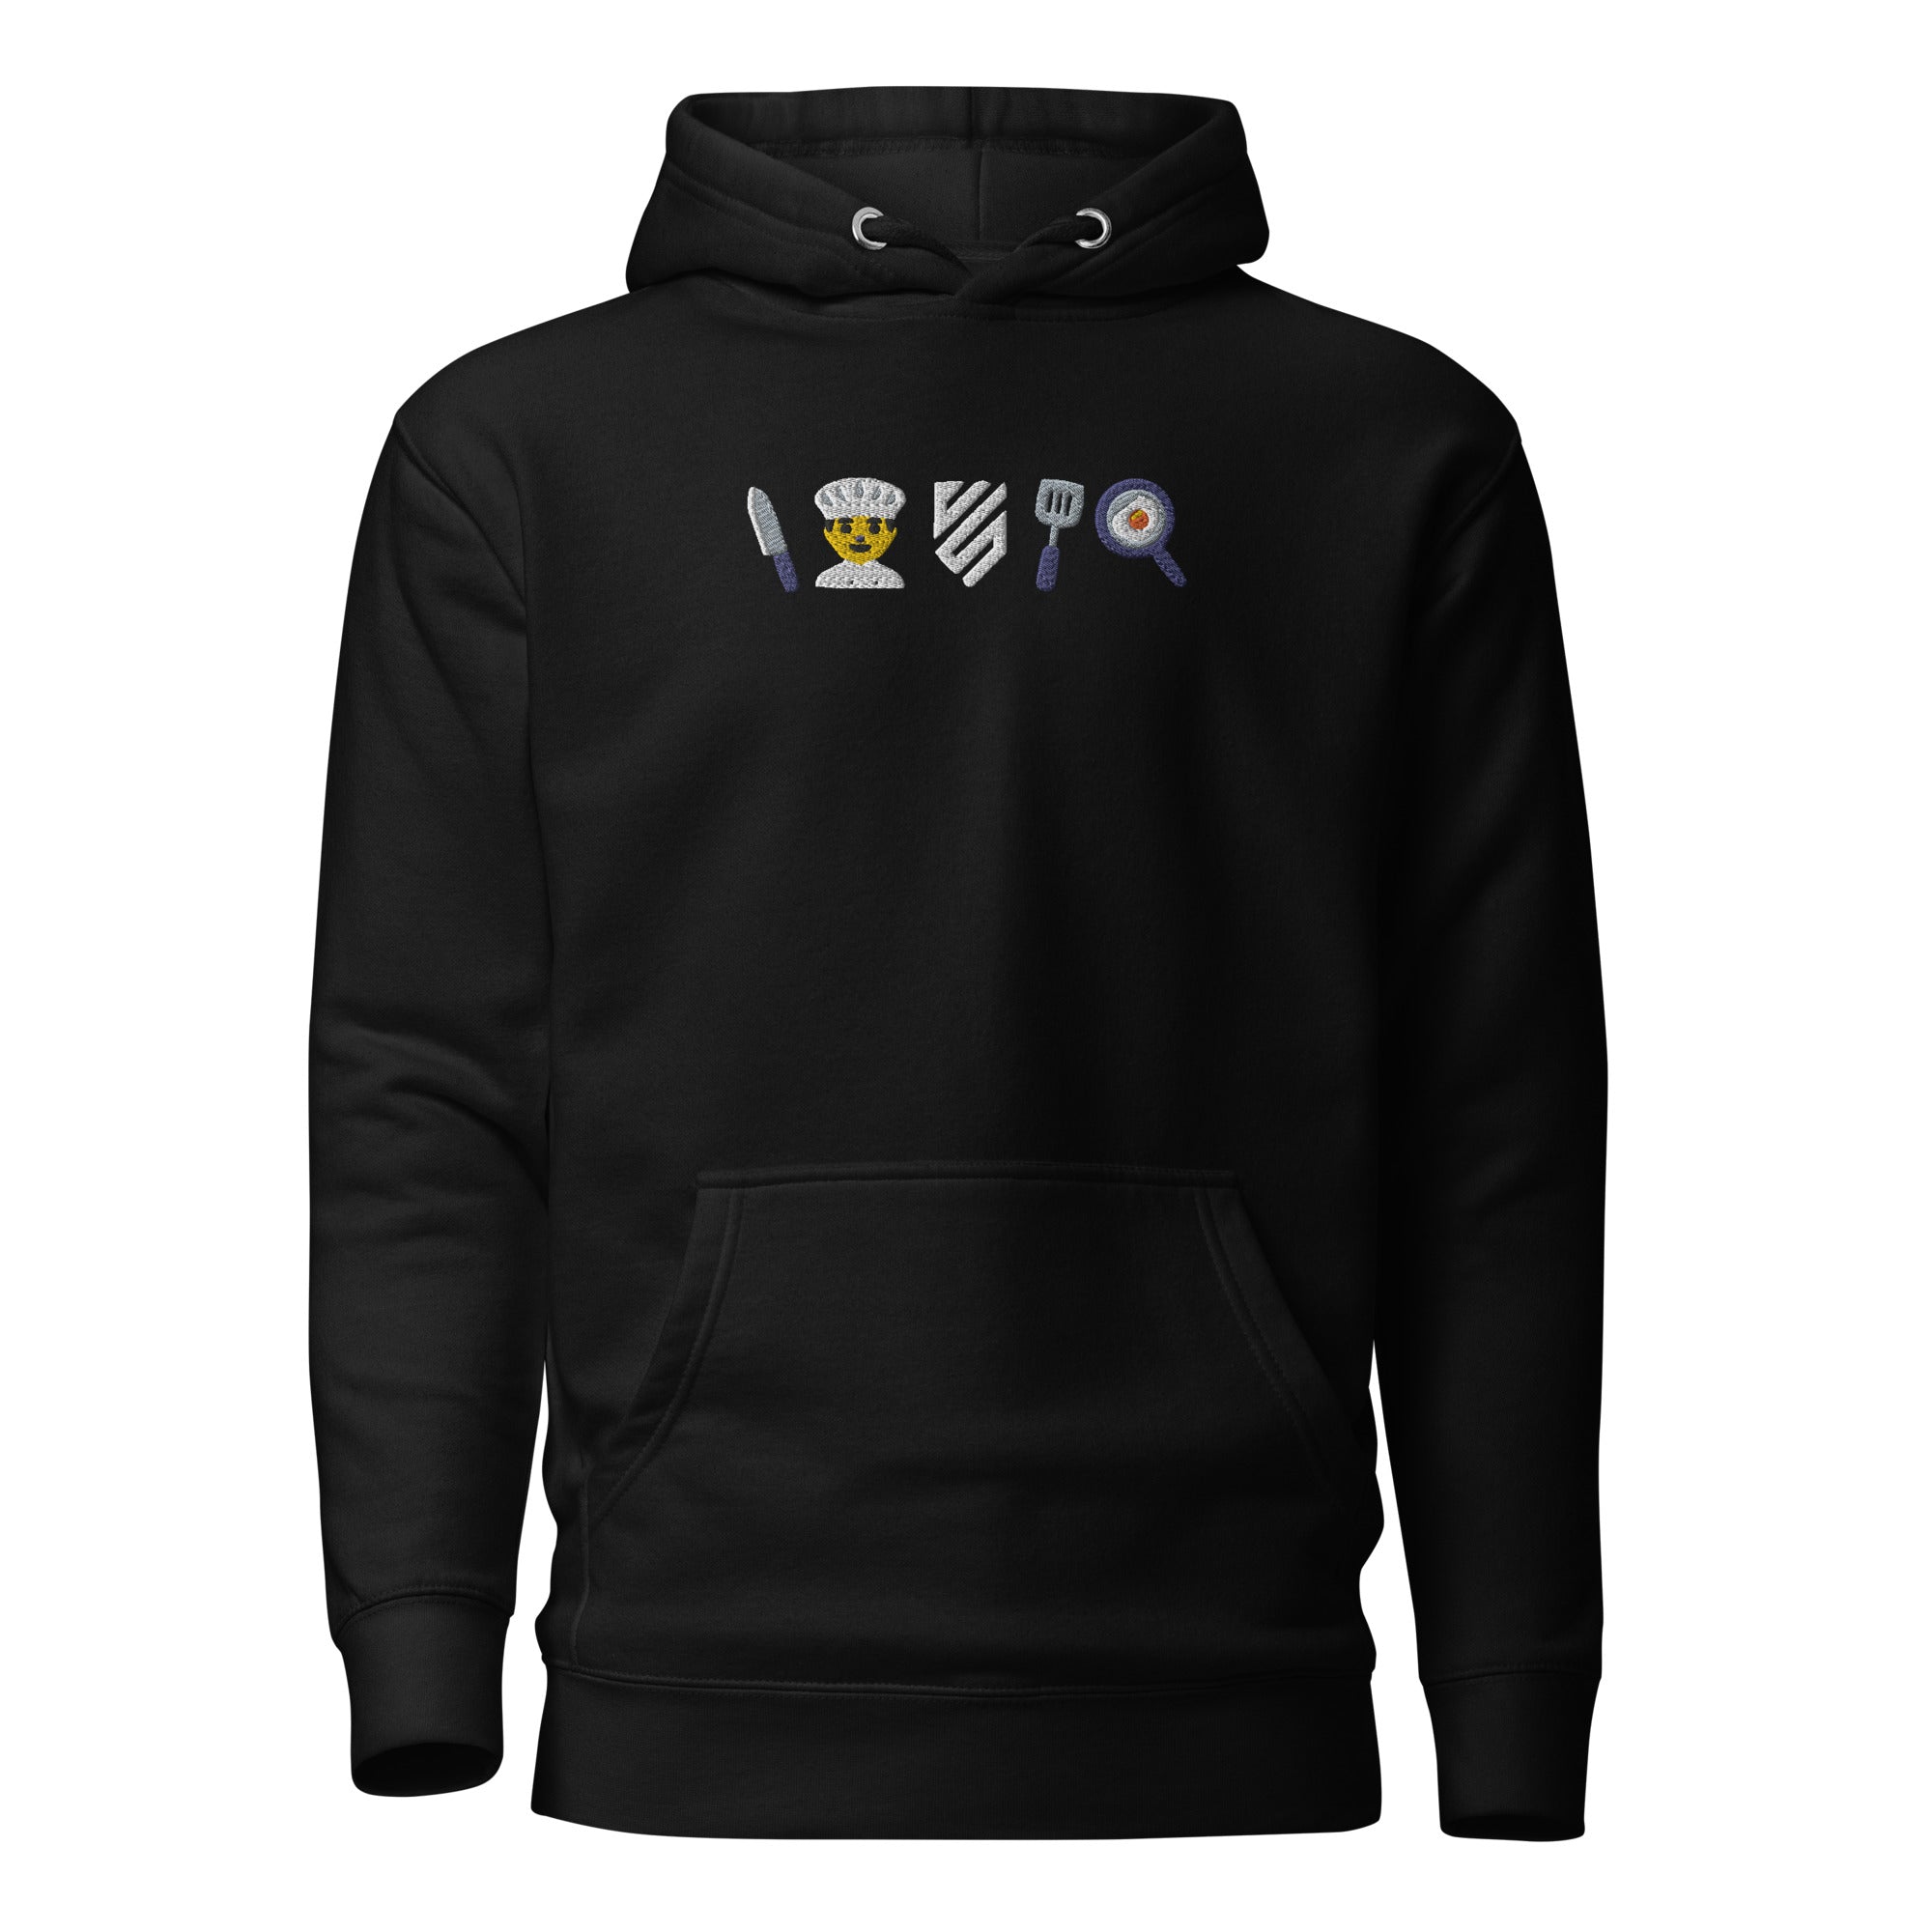 unisex-premium-hoodie-black-front-64daa18c14faa.jpg